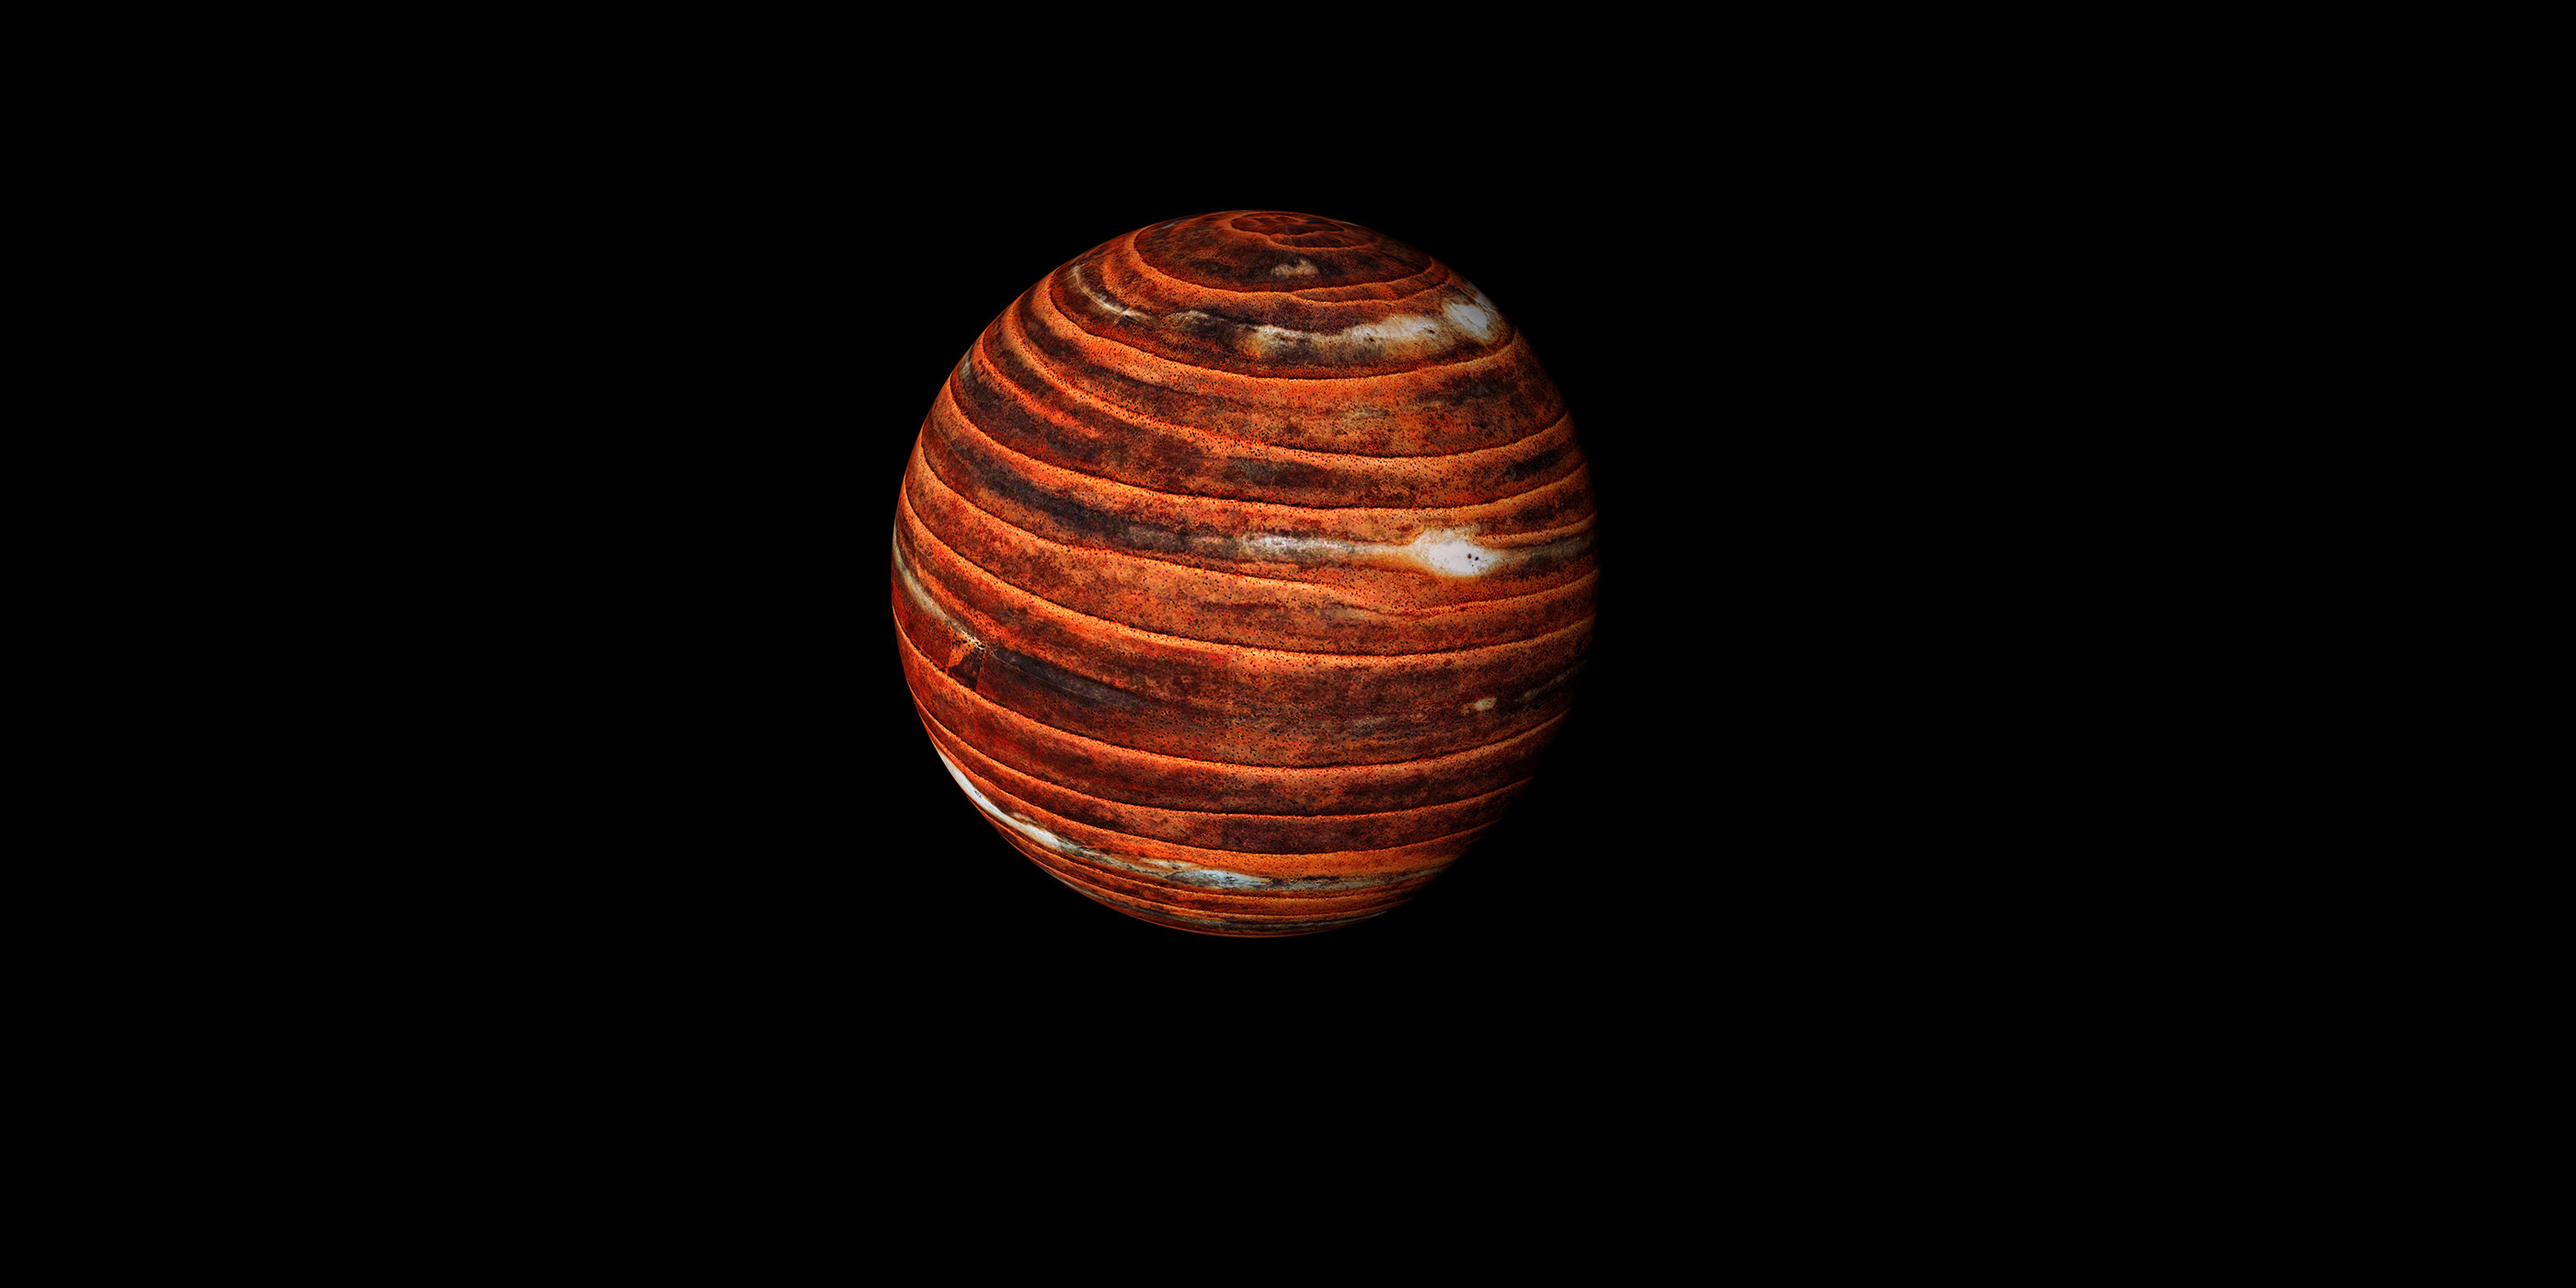 Earth Galaxy :: We made some new planets! on Behancefd4f6b92139559.5e43bce99b5c3.jpg